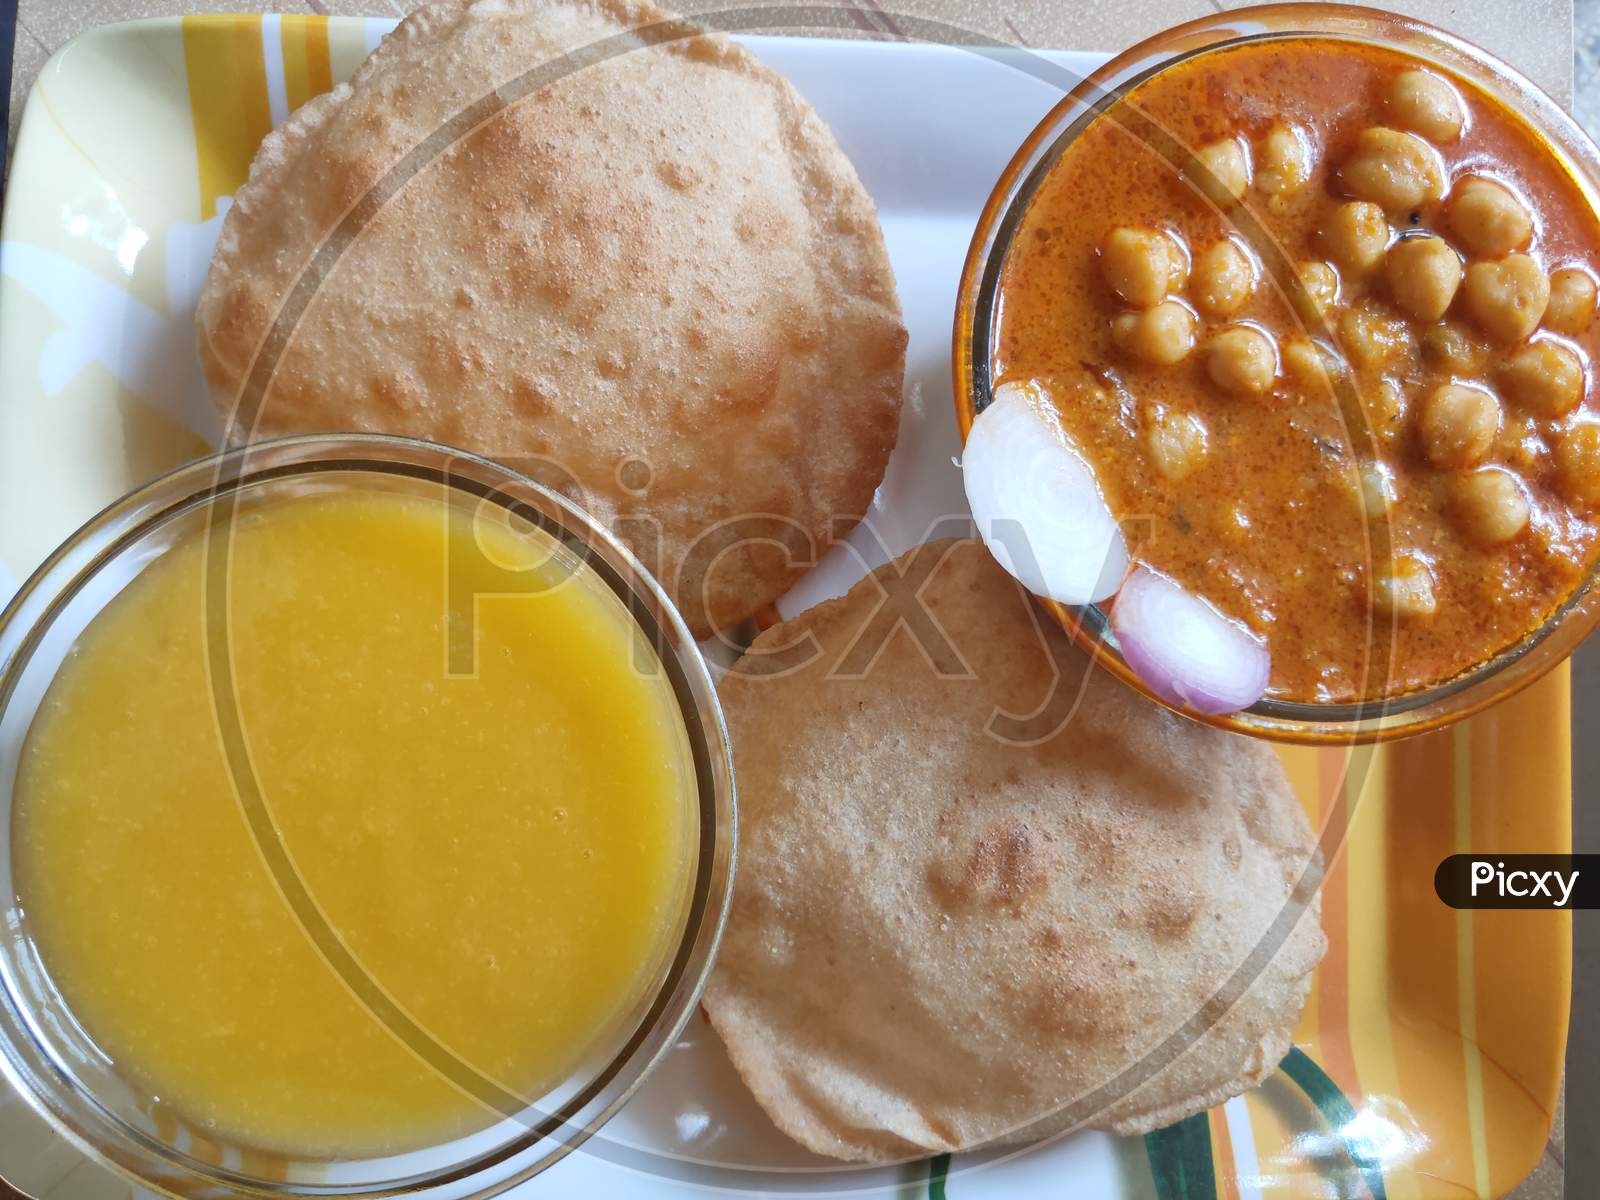 Chole Poori and Mango juice. Chickpeas receipe and Mango juice. Chole Puri in a plate.